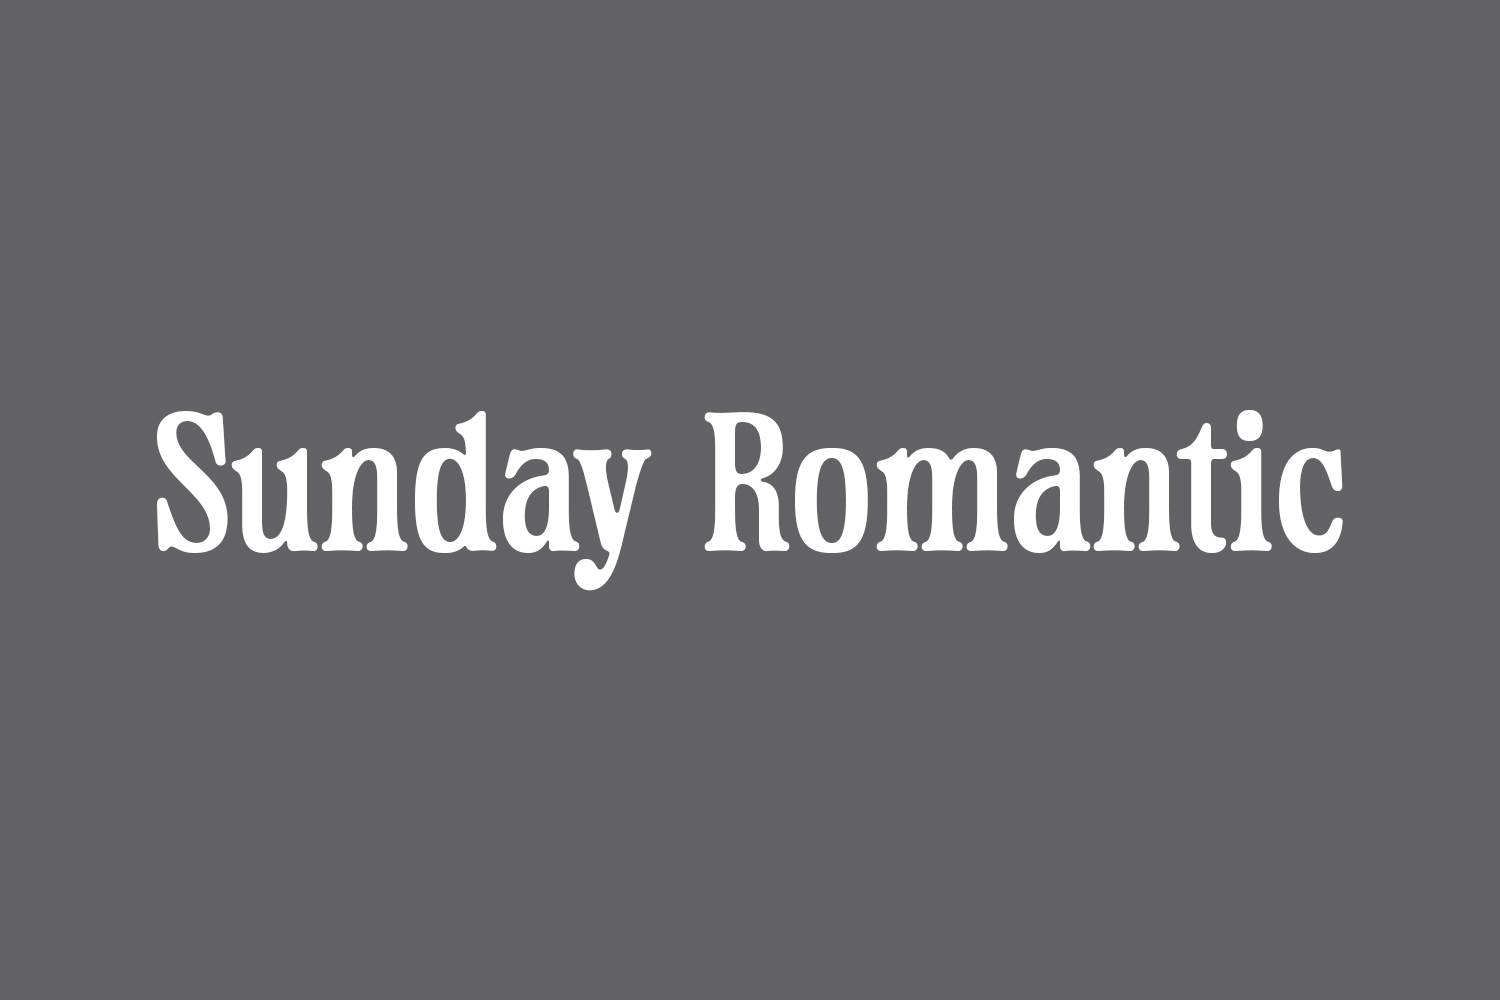 Sunday Romantic Free Font